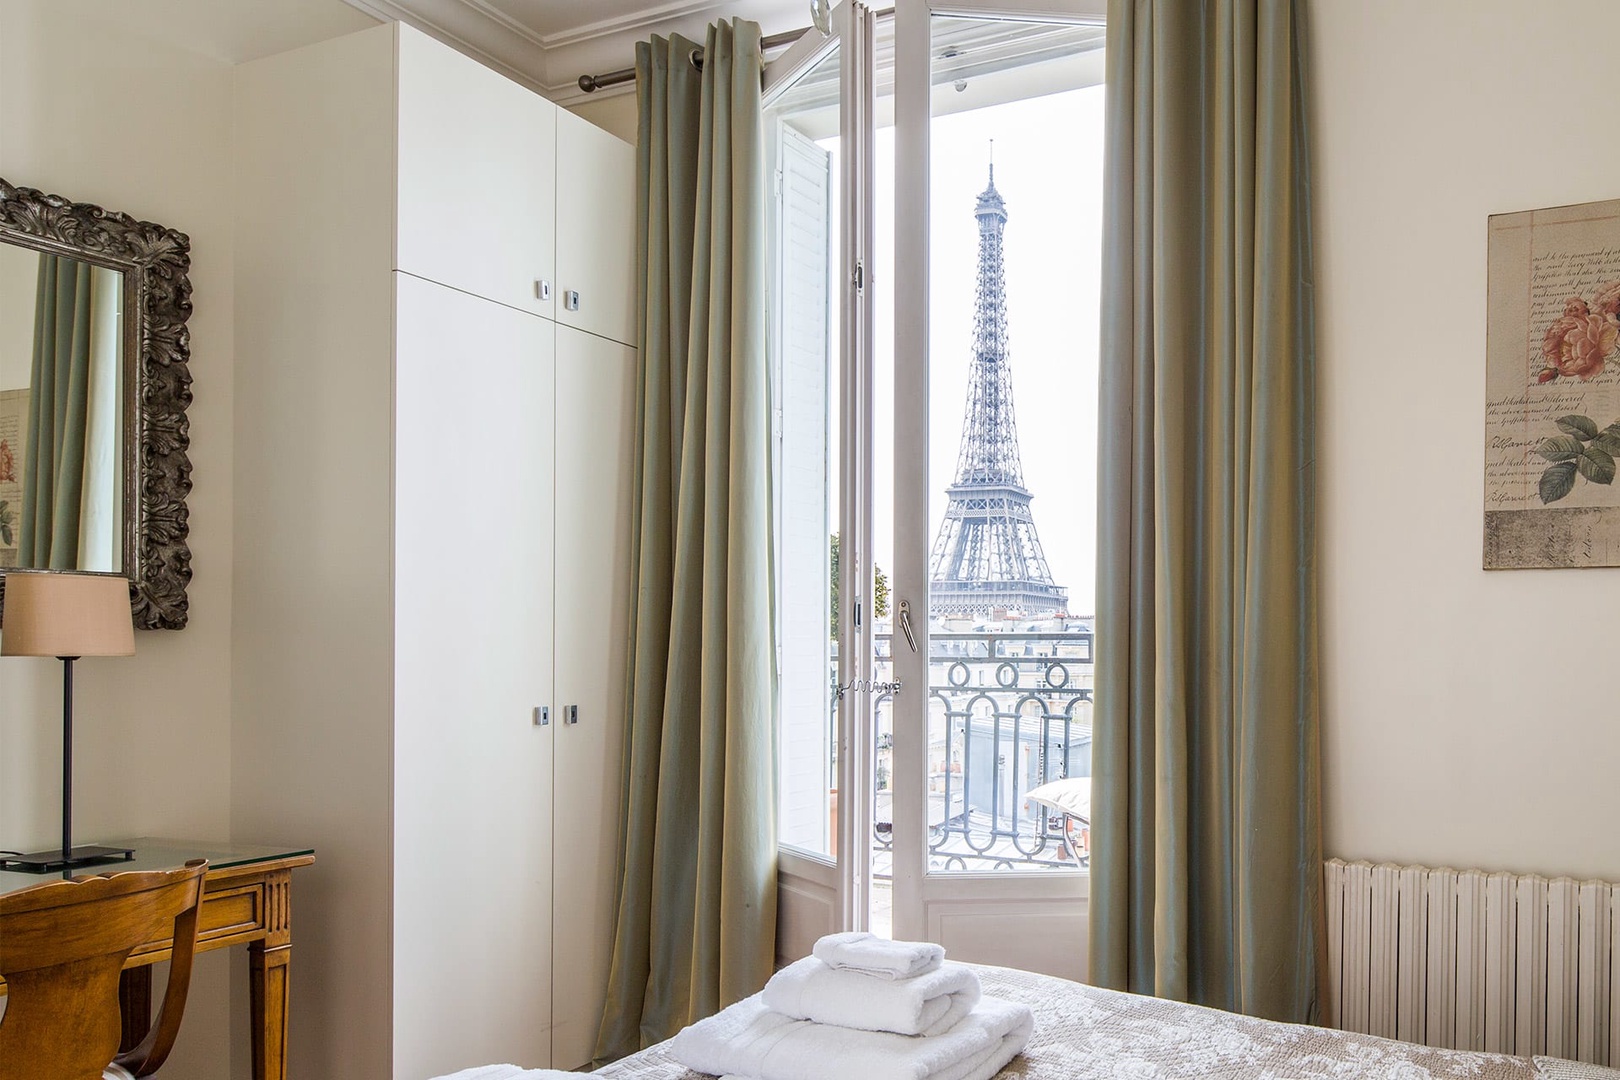 Wake up each morning to glorious views of Paris.